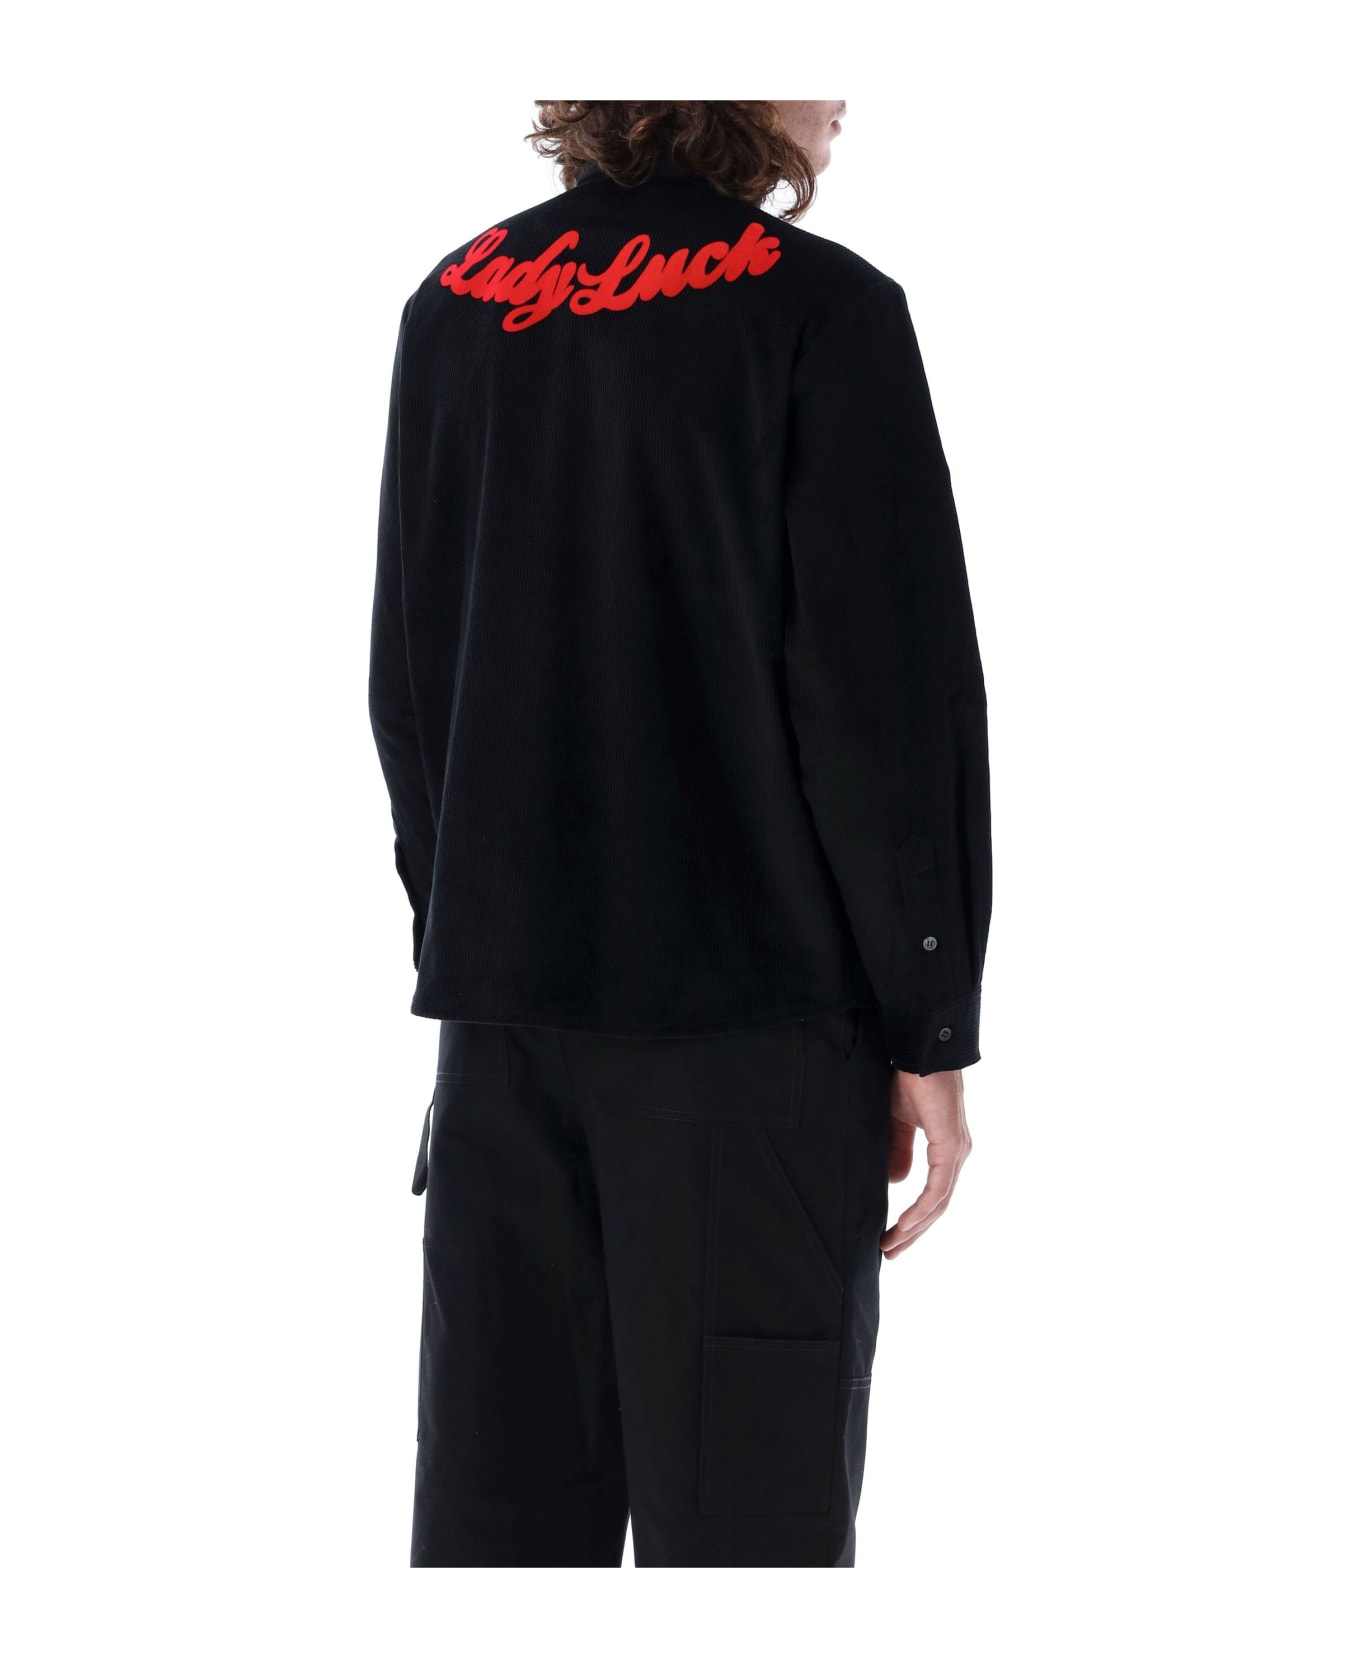 PACCBET Lady Luck Overshirt - BLACK